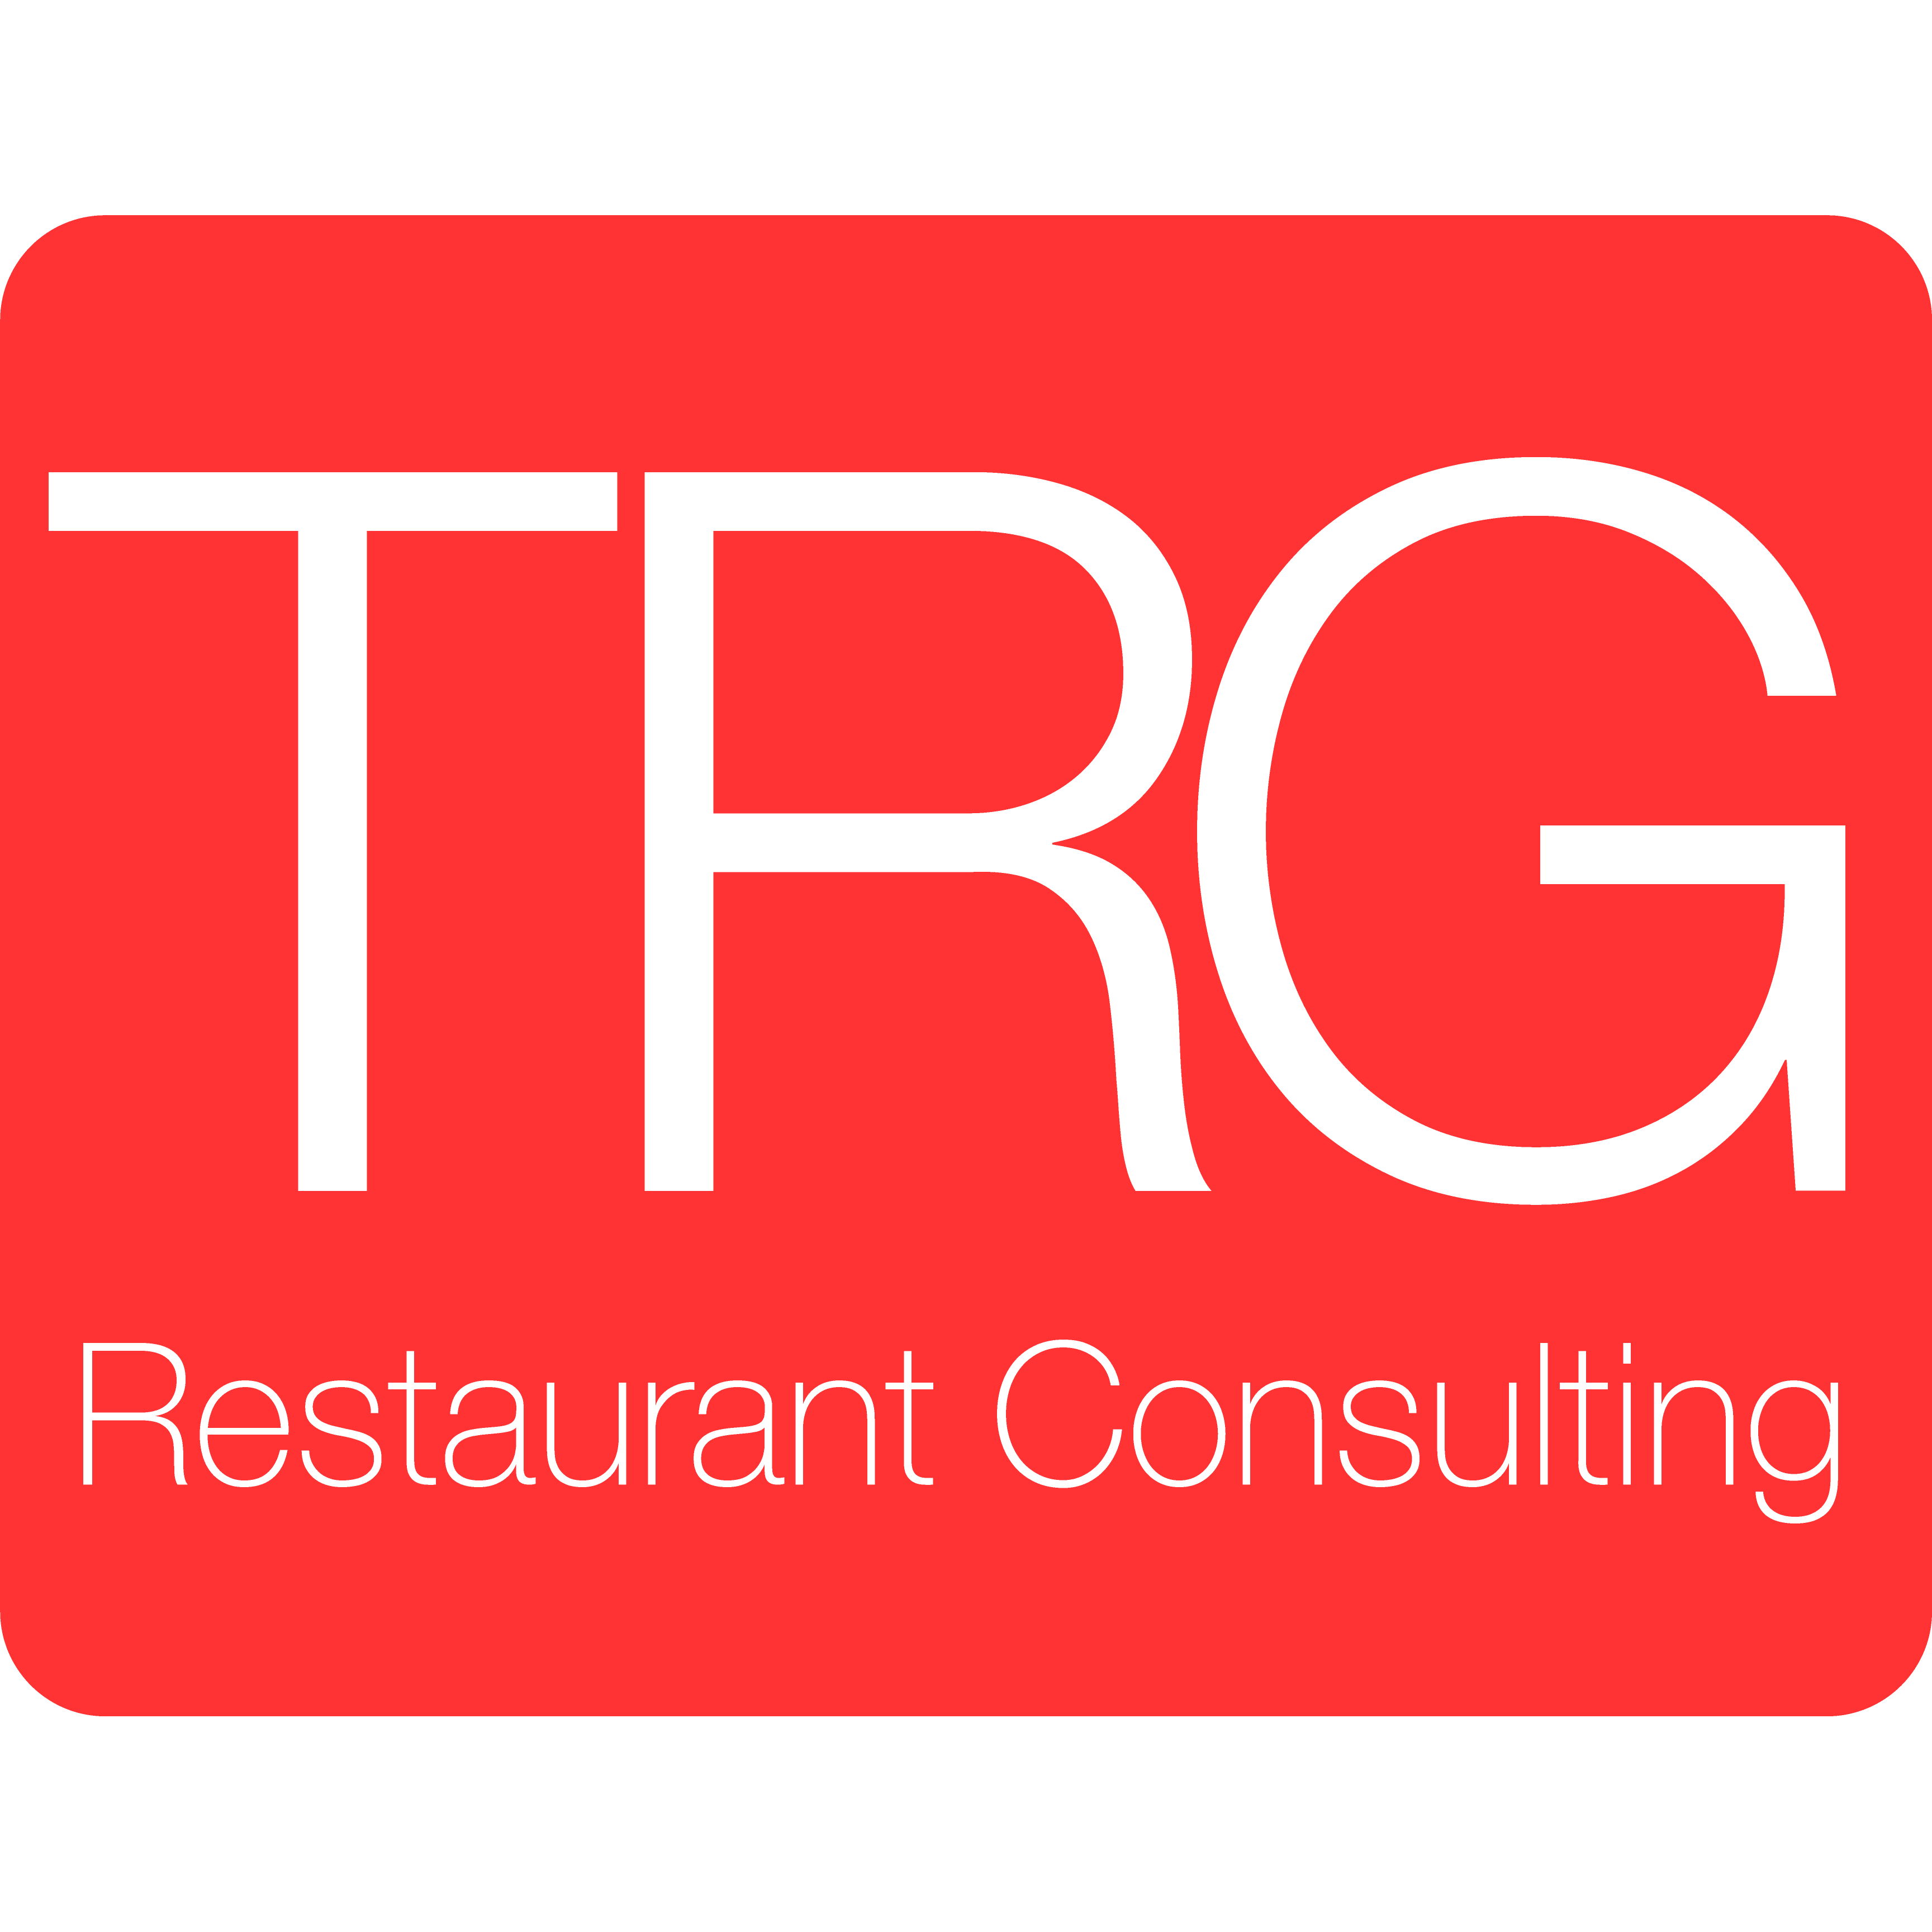 TRG Restaurant Consulting Logo